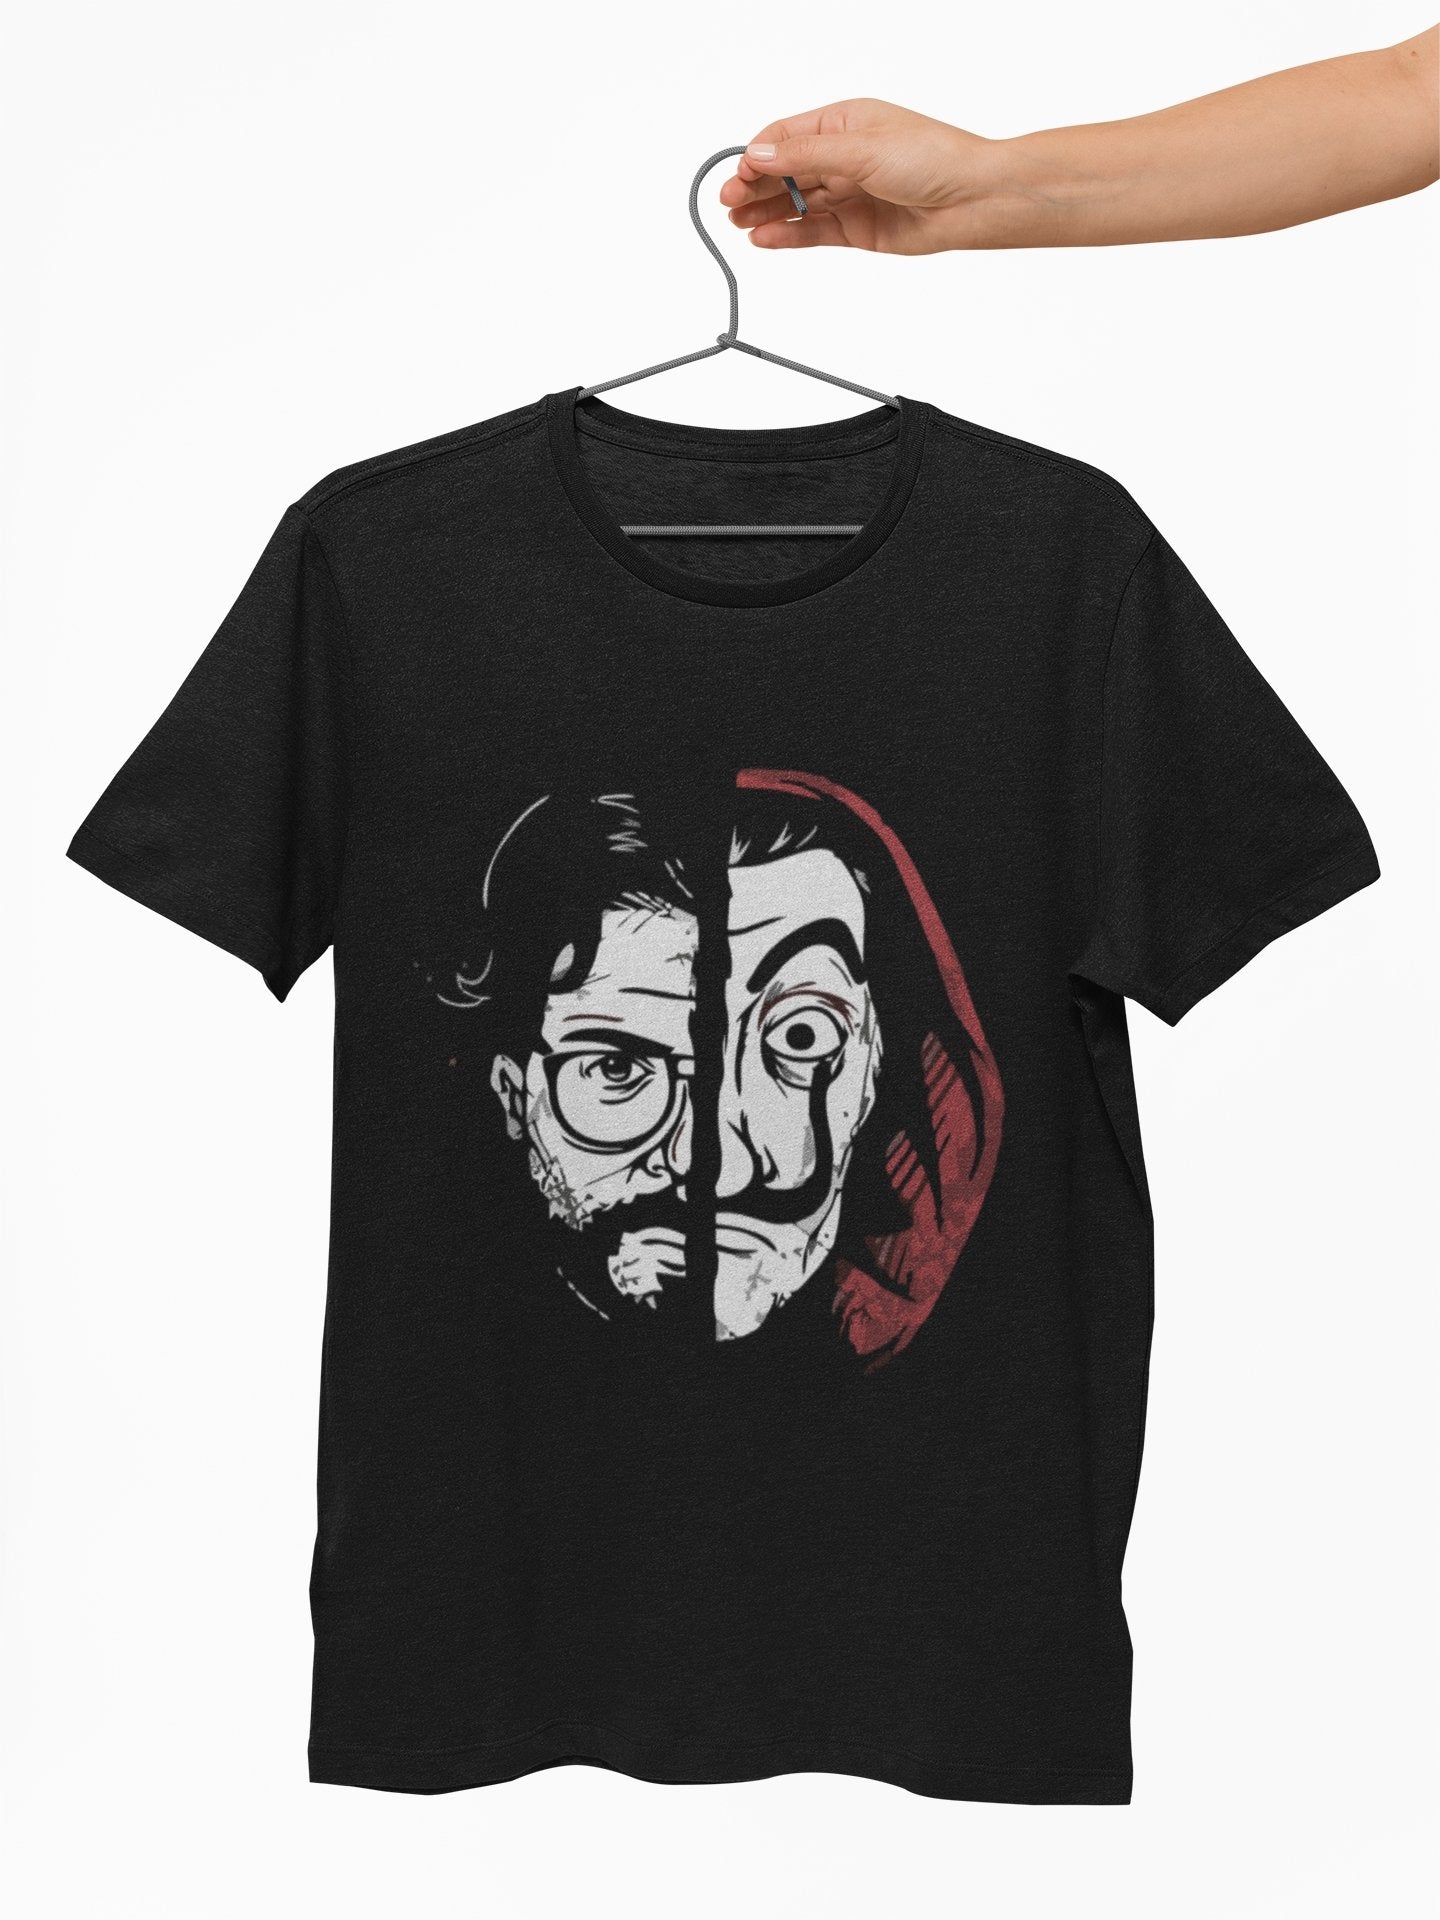 Professor two face Money heist Graphic T shirt for Men - Insane Tees